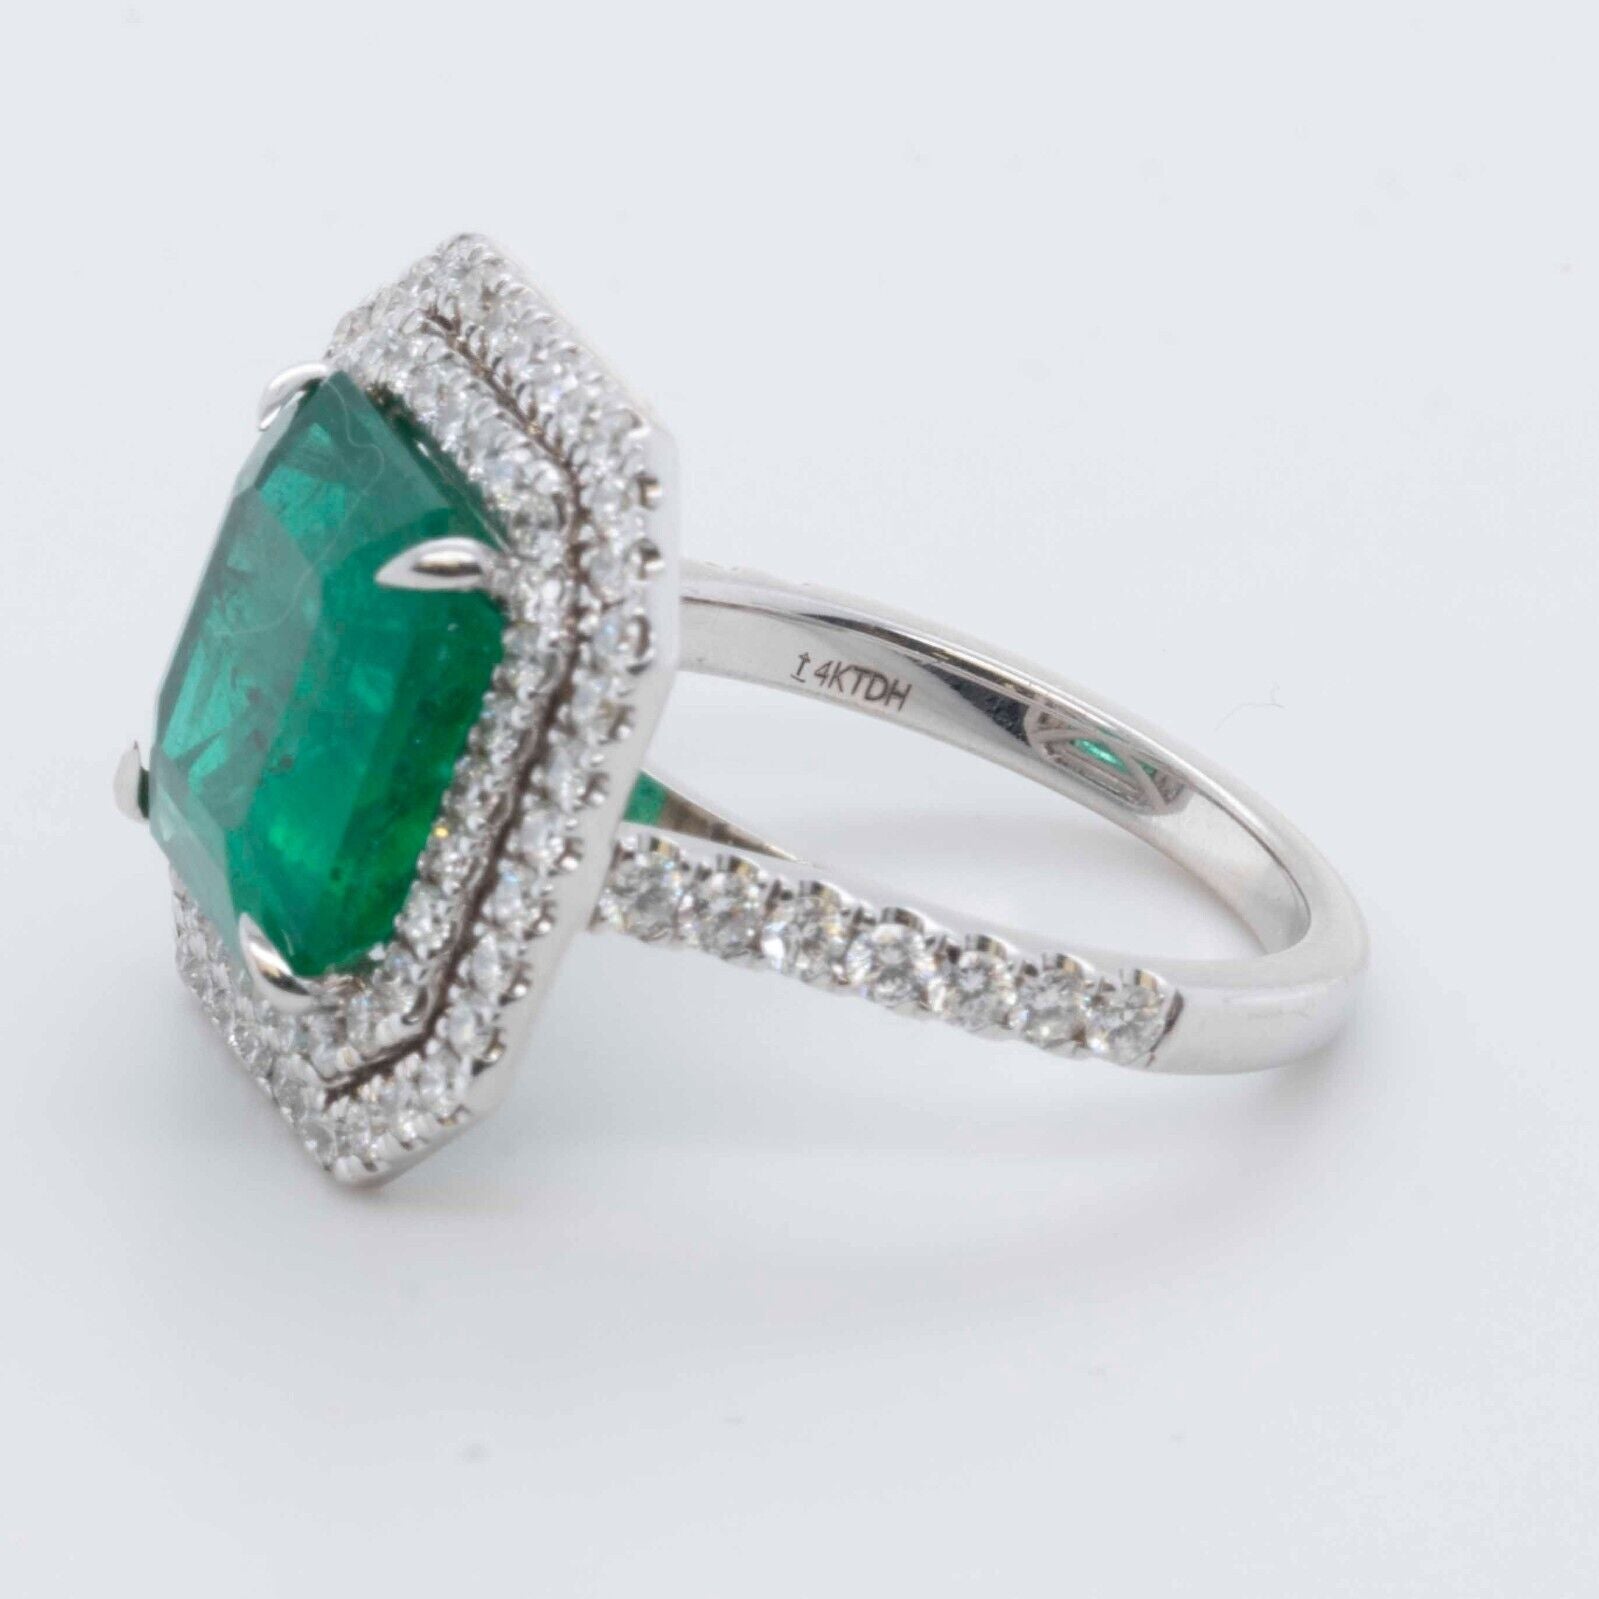 14k White Gold 5.89ct Em Cut Emerald & Diamond Double Halo Ring 0.98ctw Size 7